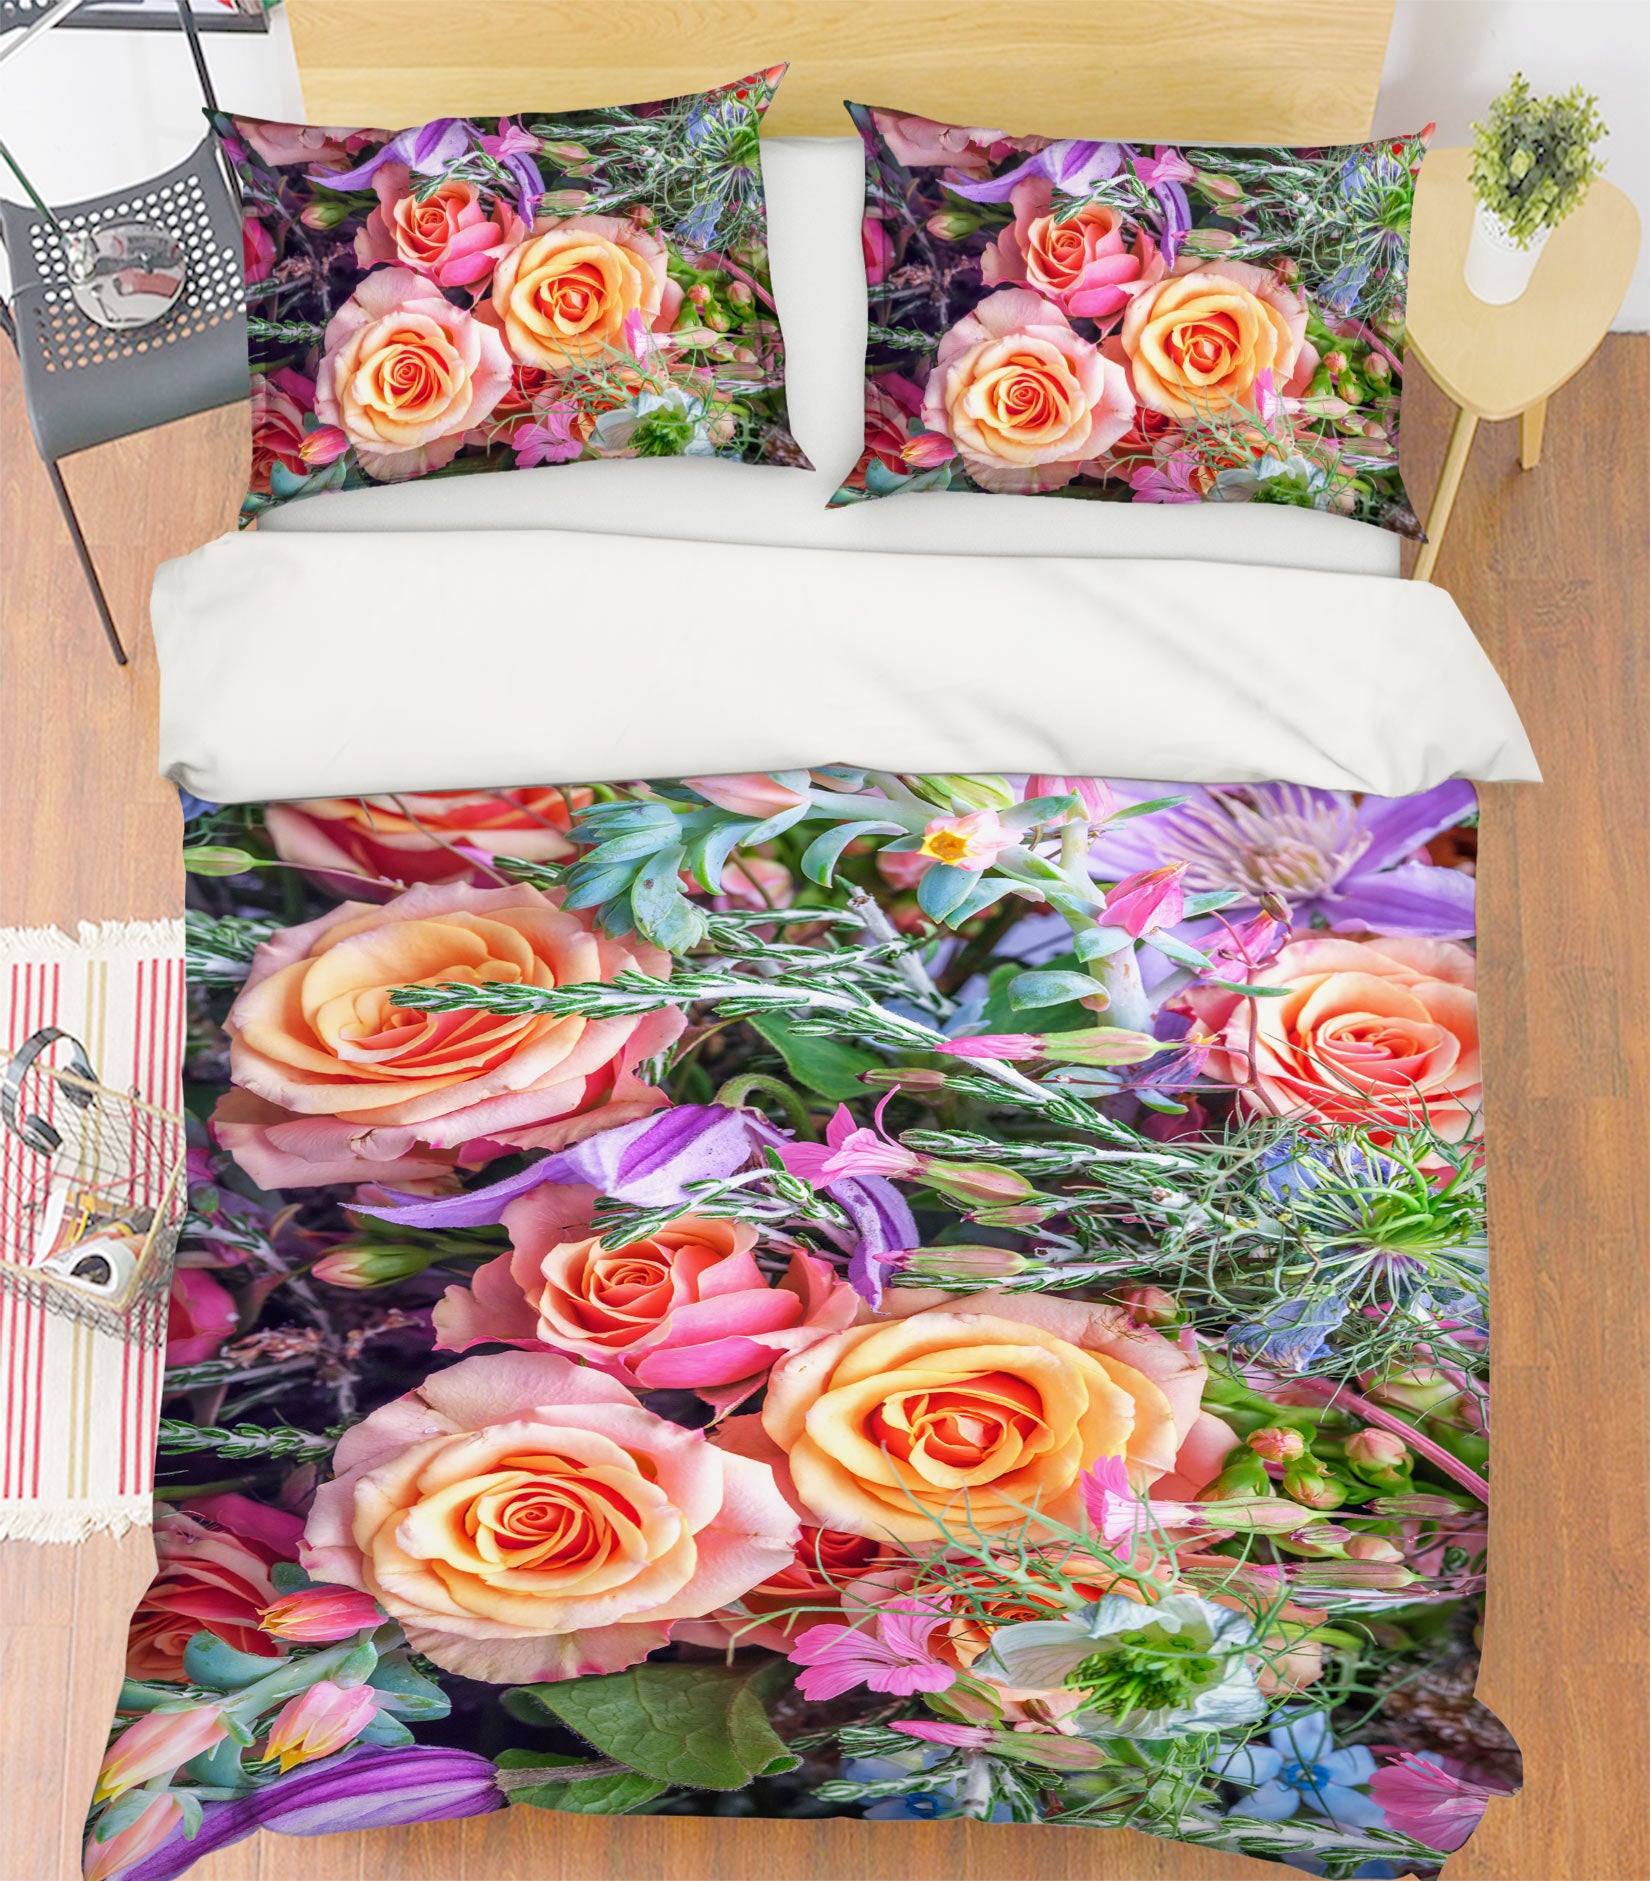 3D Bright Rose 6969 Assaf Frank Bedding Bed Pillowcases Quilt Cover Duvet Cover